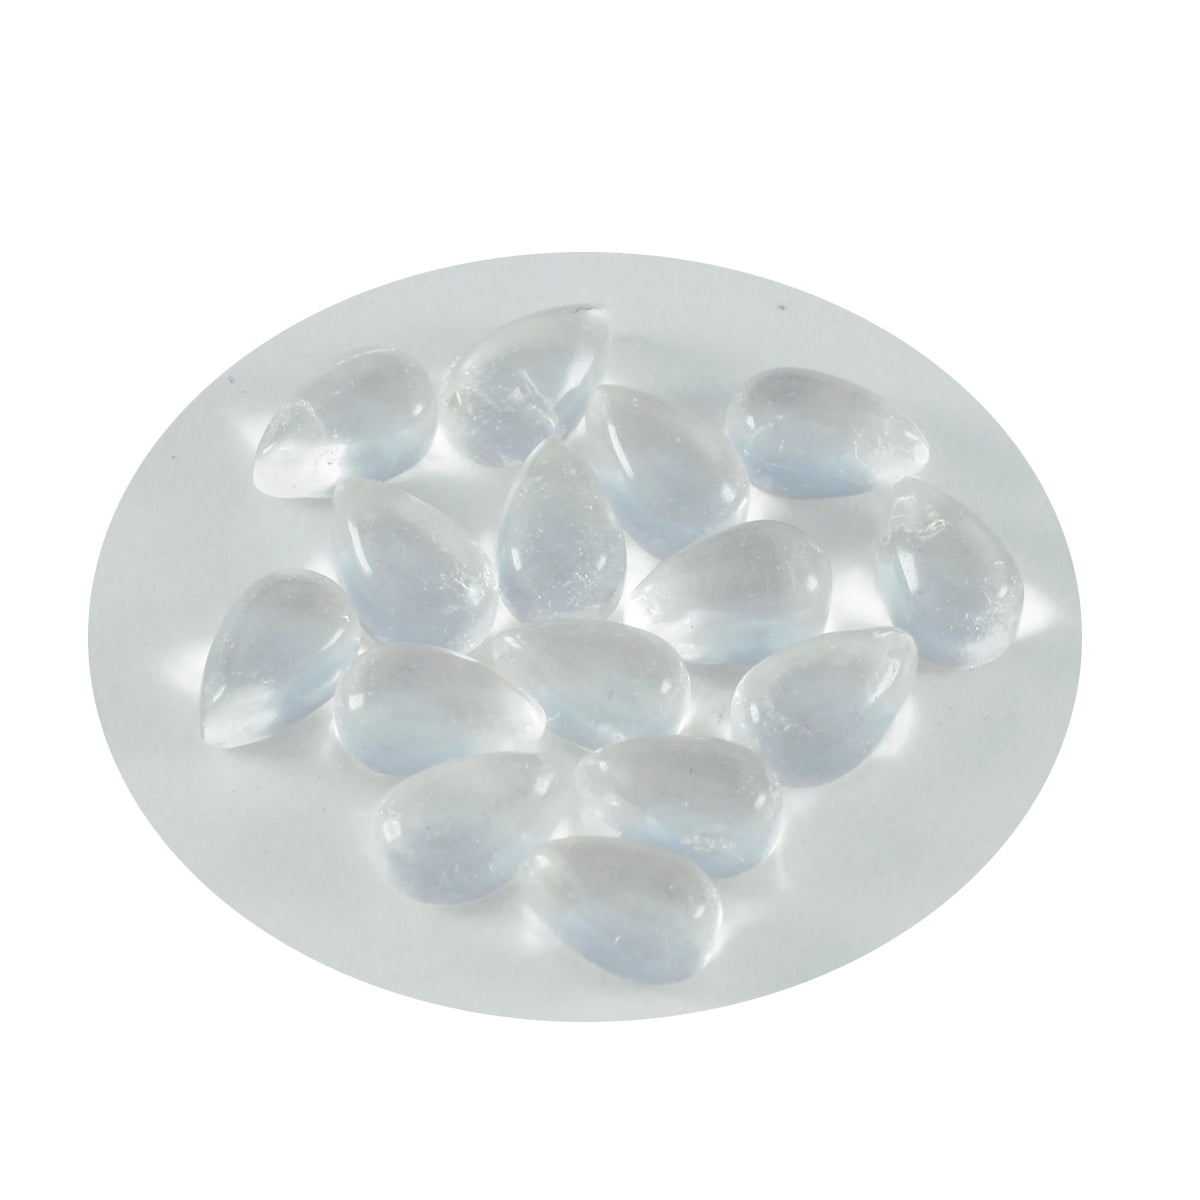 Riyogems 1PC White Crystal Quartz Cabochon 4x6 mm Pear Shape sweet Quality Loose Stone